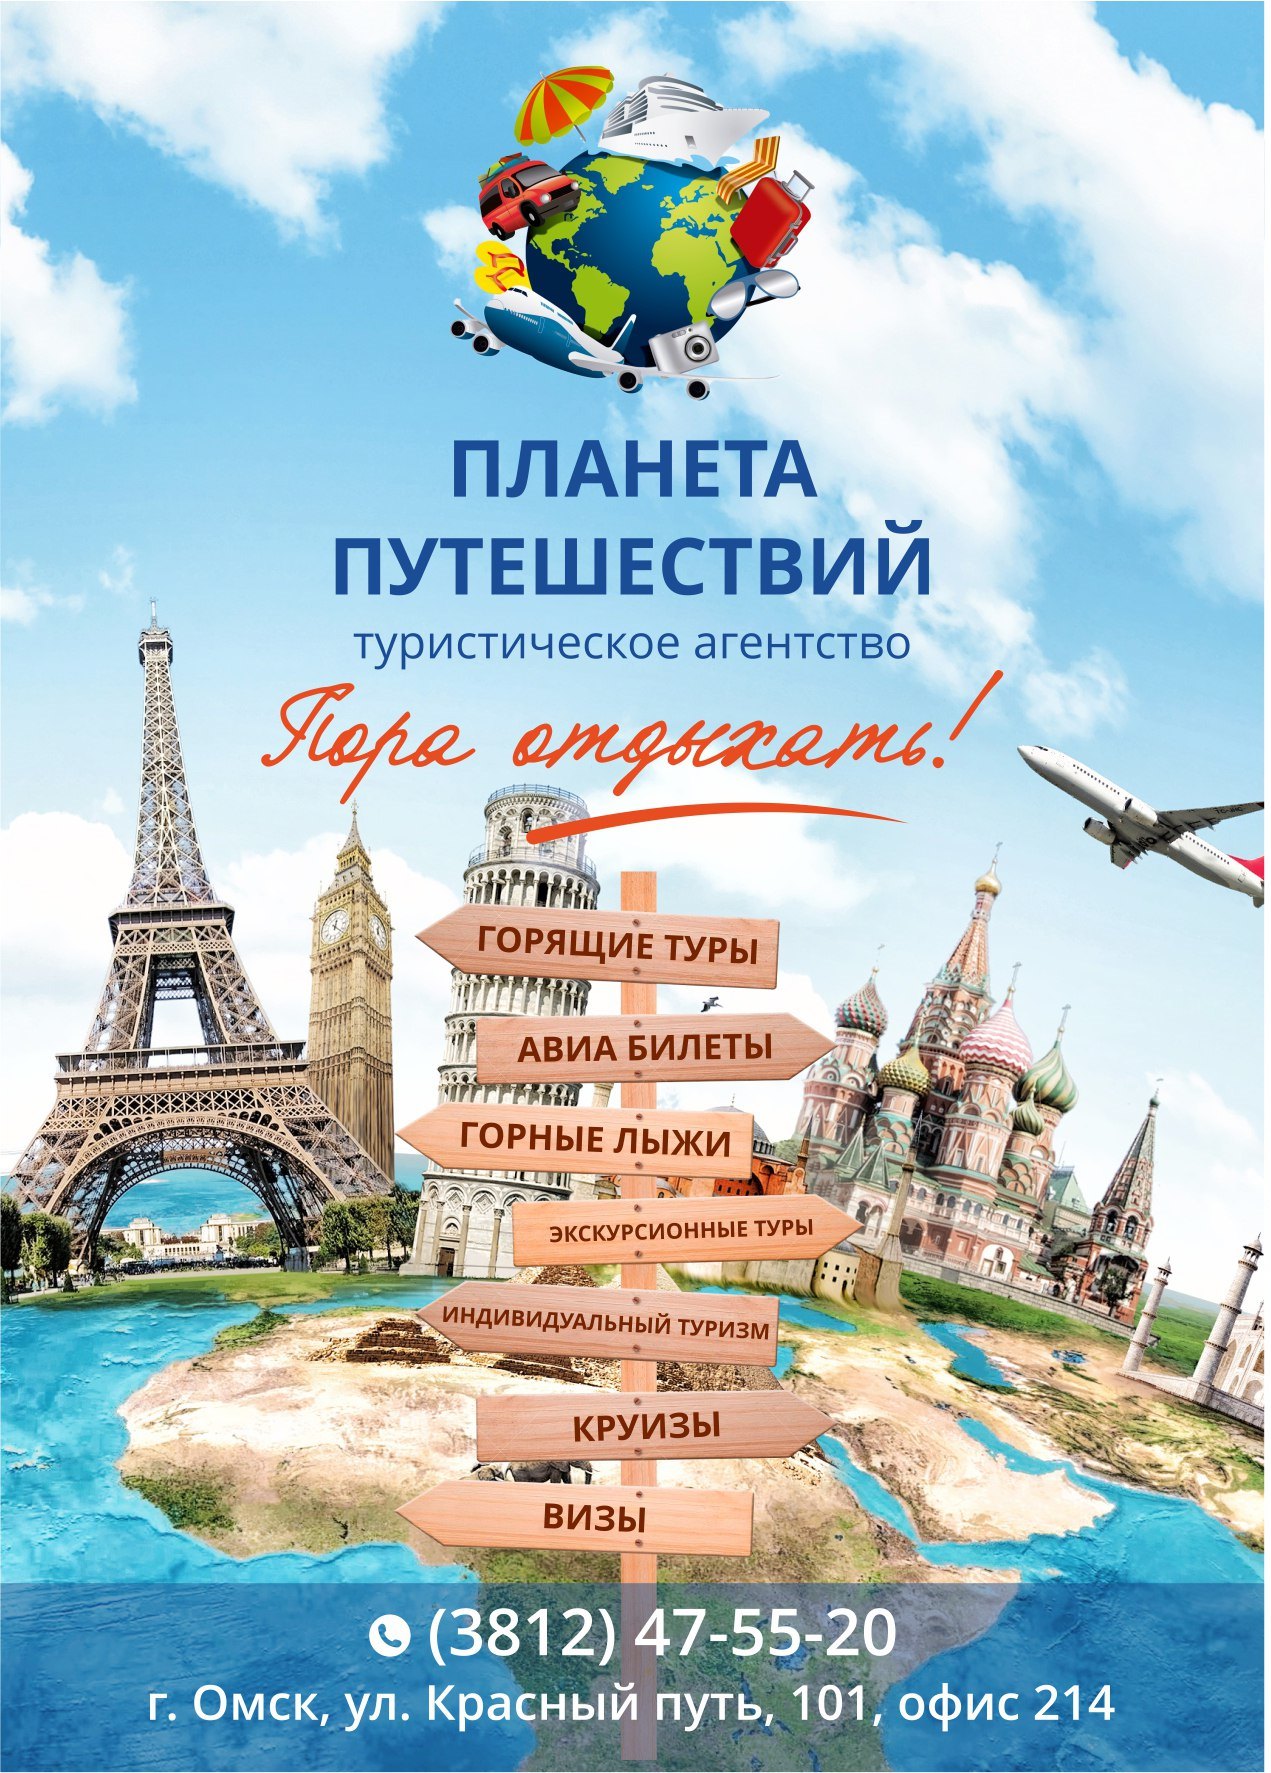 Слоган туристического города. Реклама турагентства. Плакат туристического агентства. Рекламный плакат туризм. Реклама путешествий.